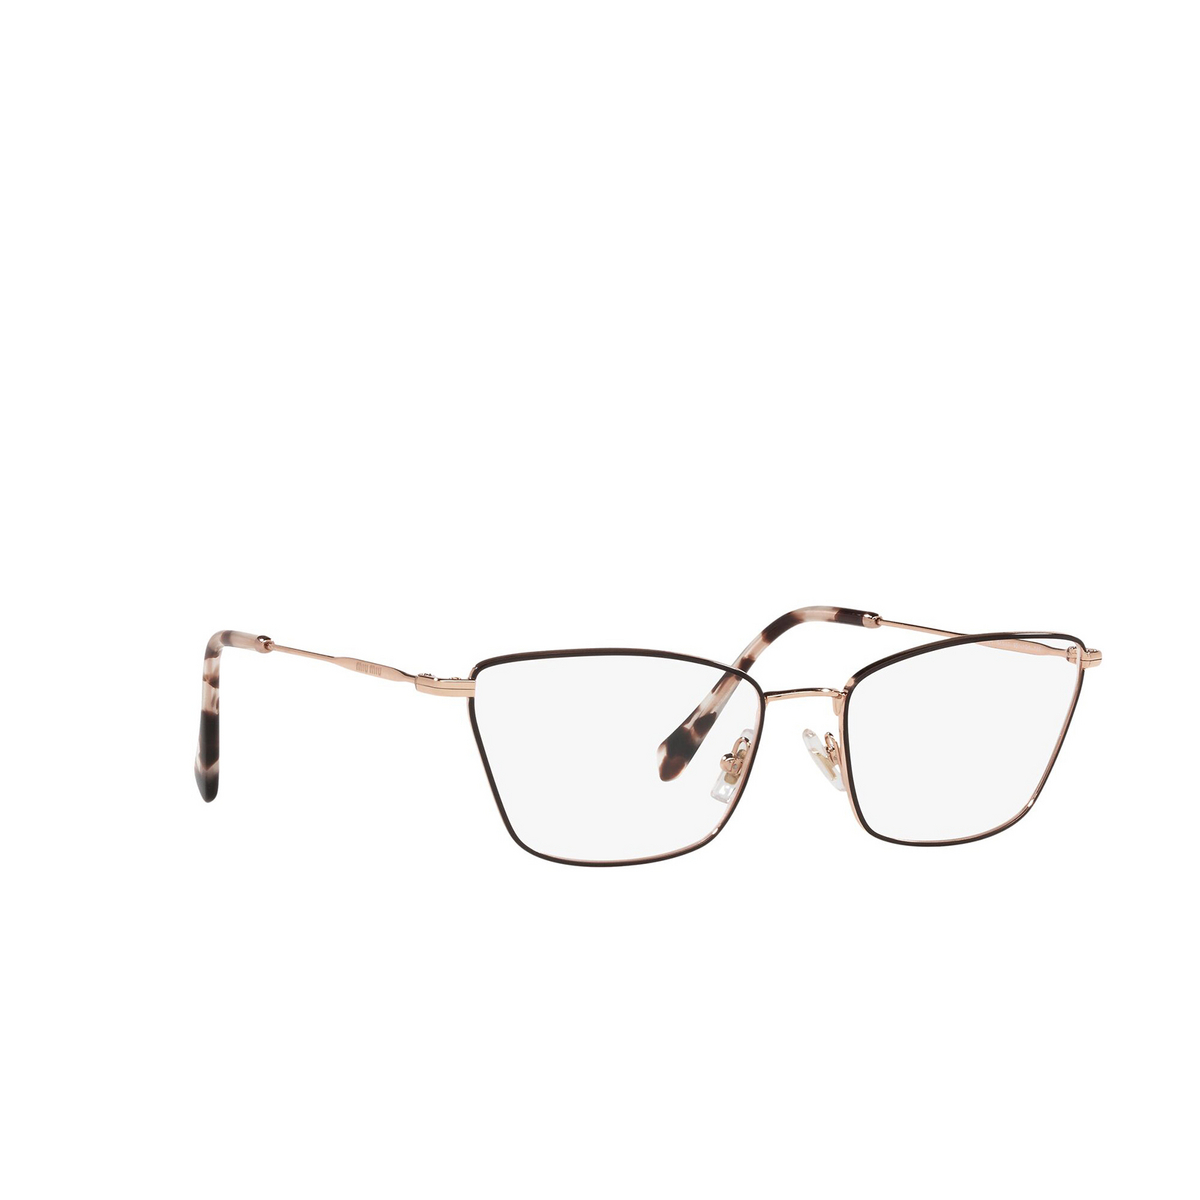 Miu Miu® Cat-eye Eyeglasses: MU 52SV color Brown 3311O1 - three-quarters view.